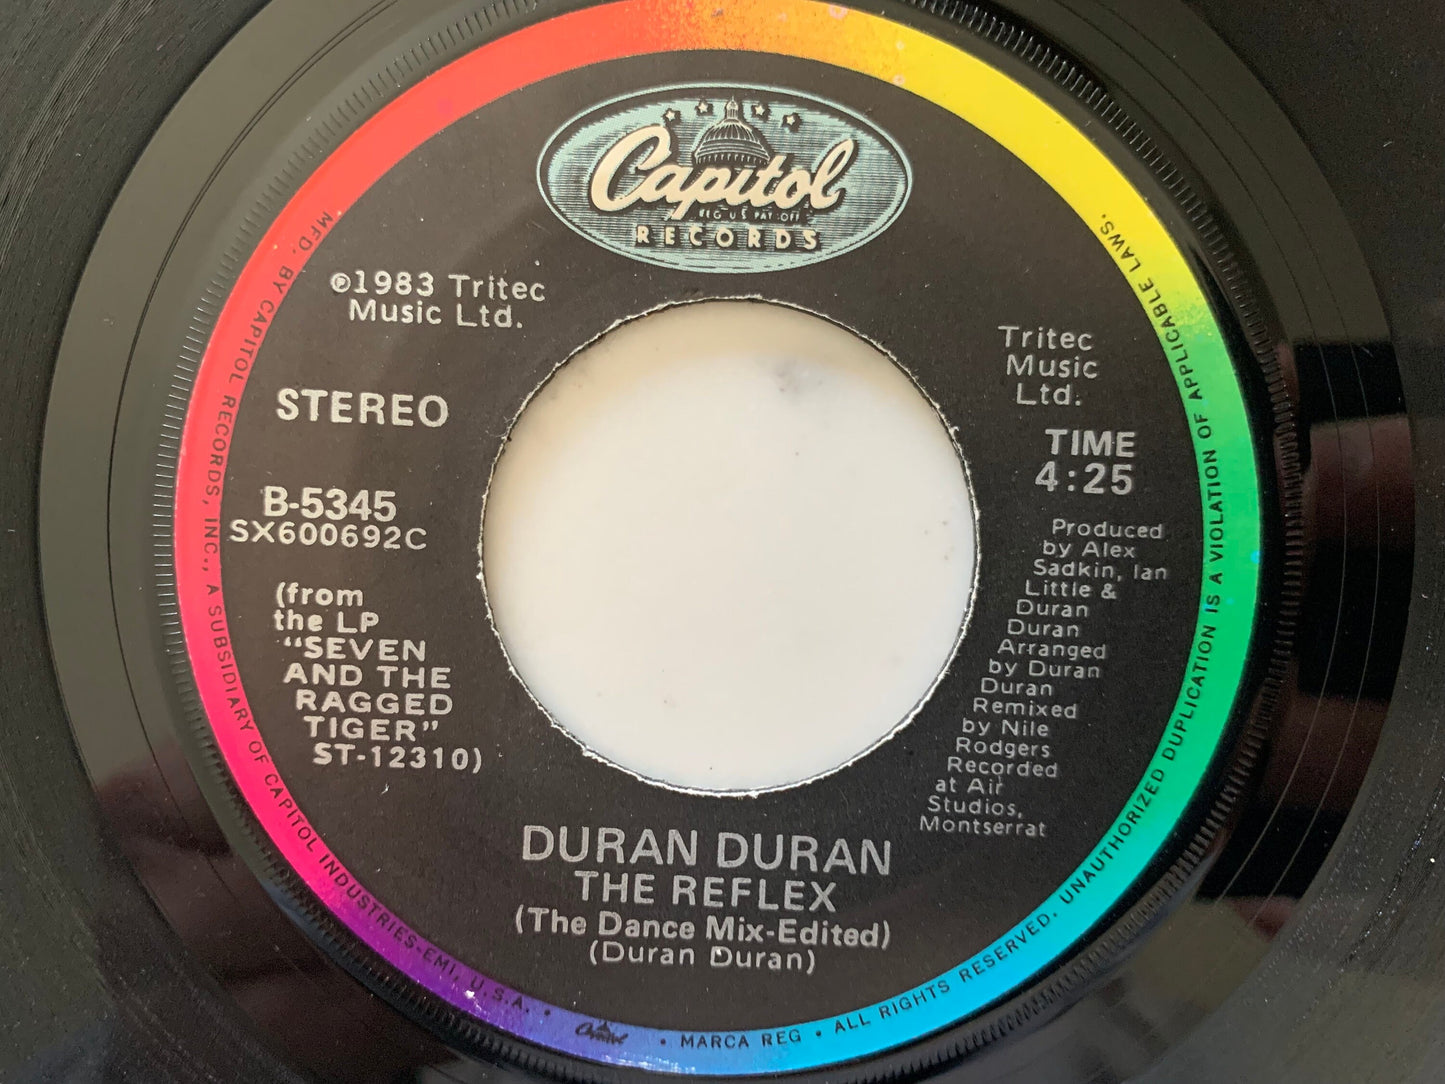 Duran Duran The Reflex, New Religion Capitol Records 1983 B-5345 Masterdisk Original Duran Duran Singles, Limited Edition Poster Sleeve